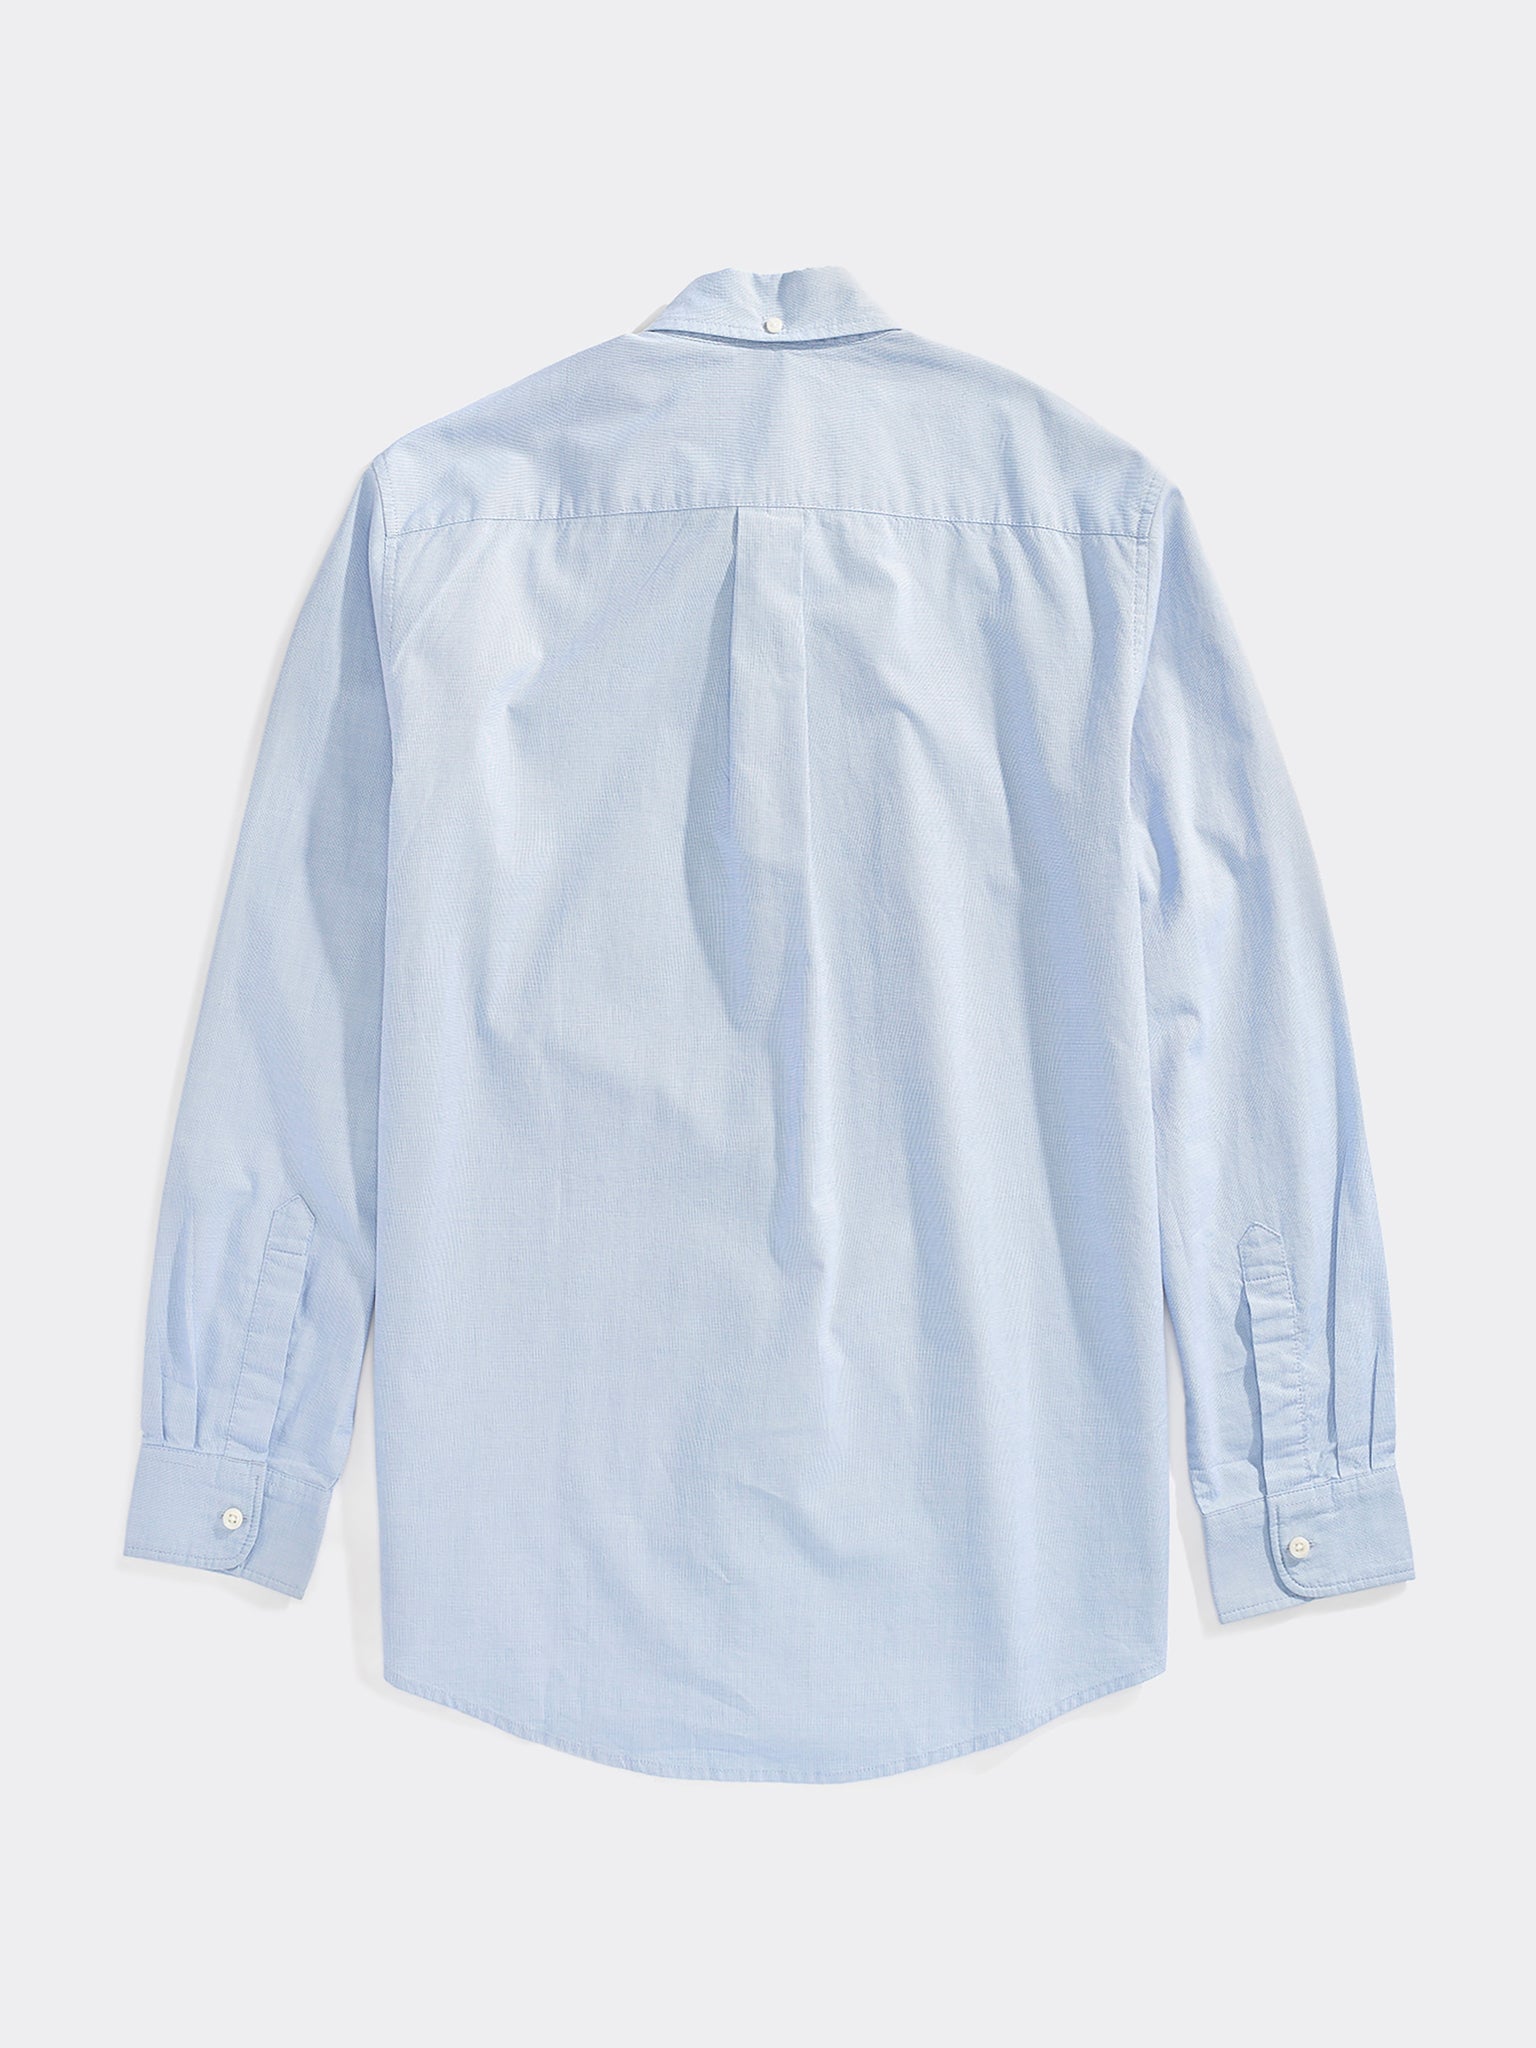 Capote Shirt - Blue